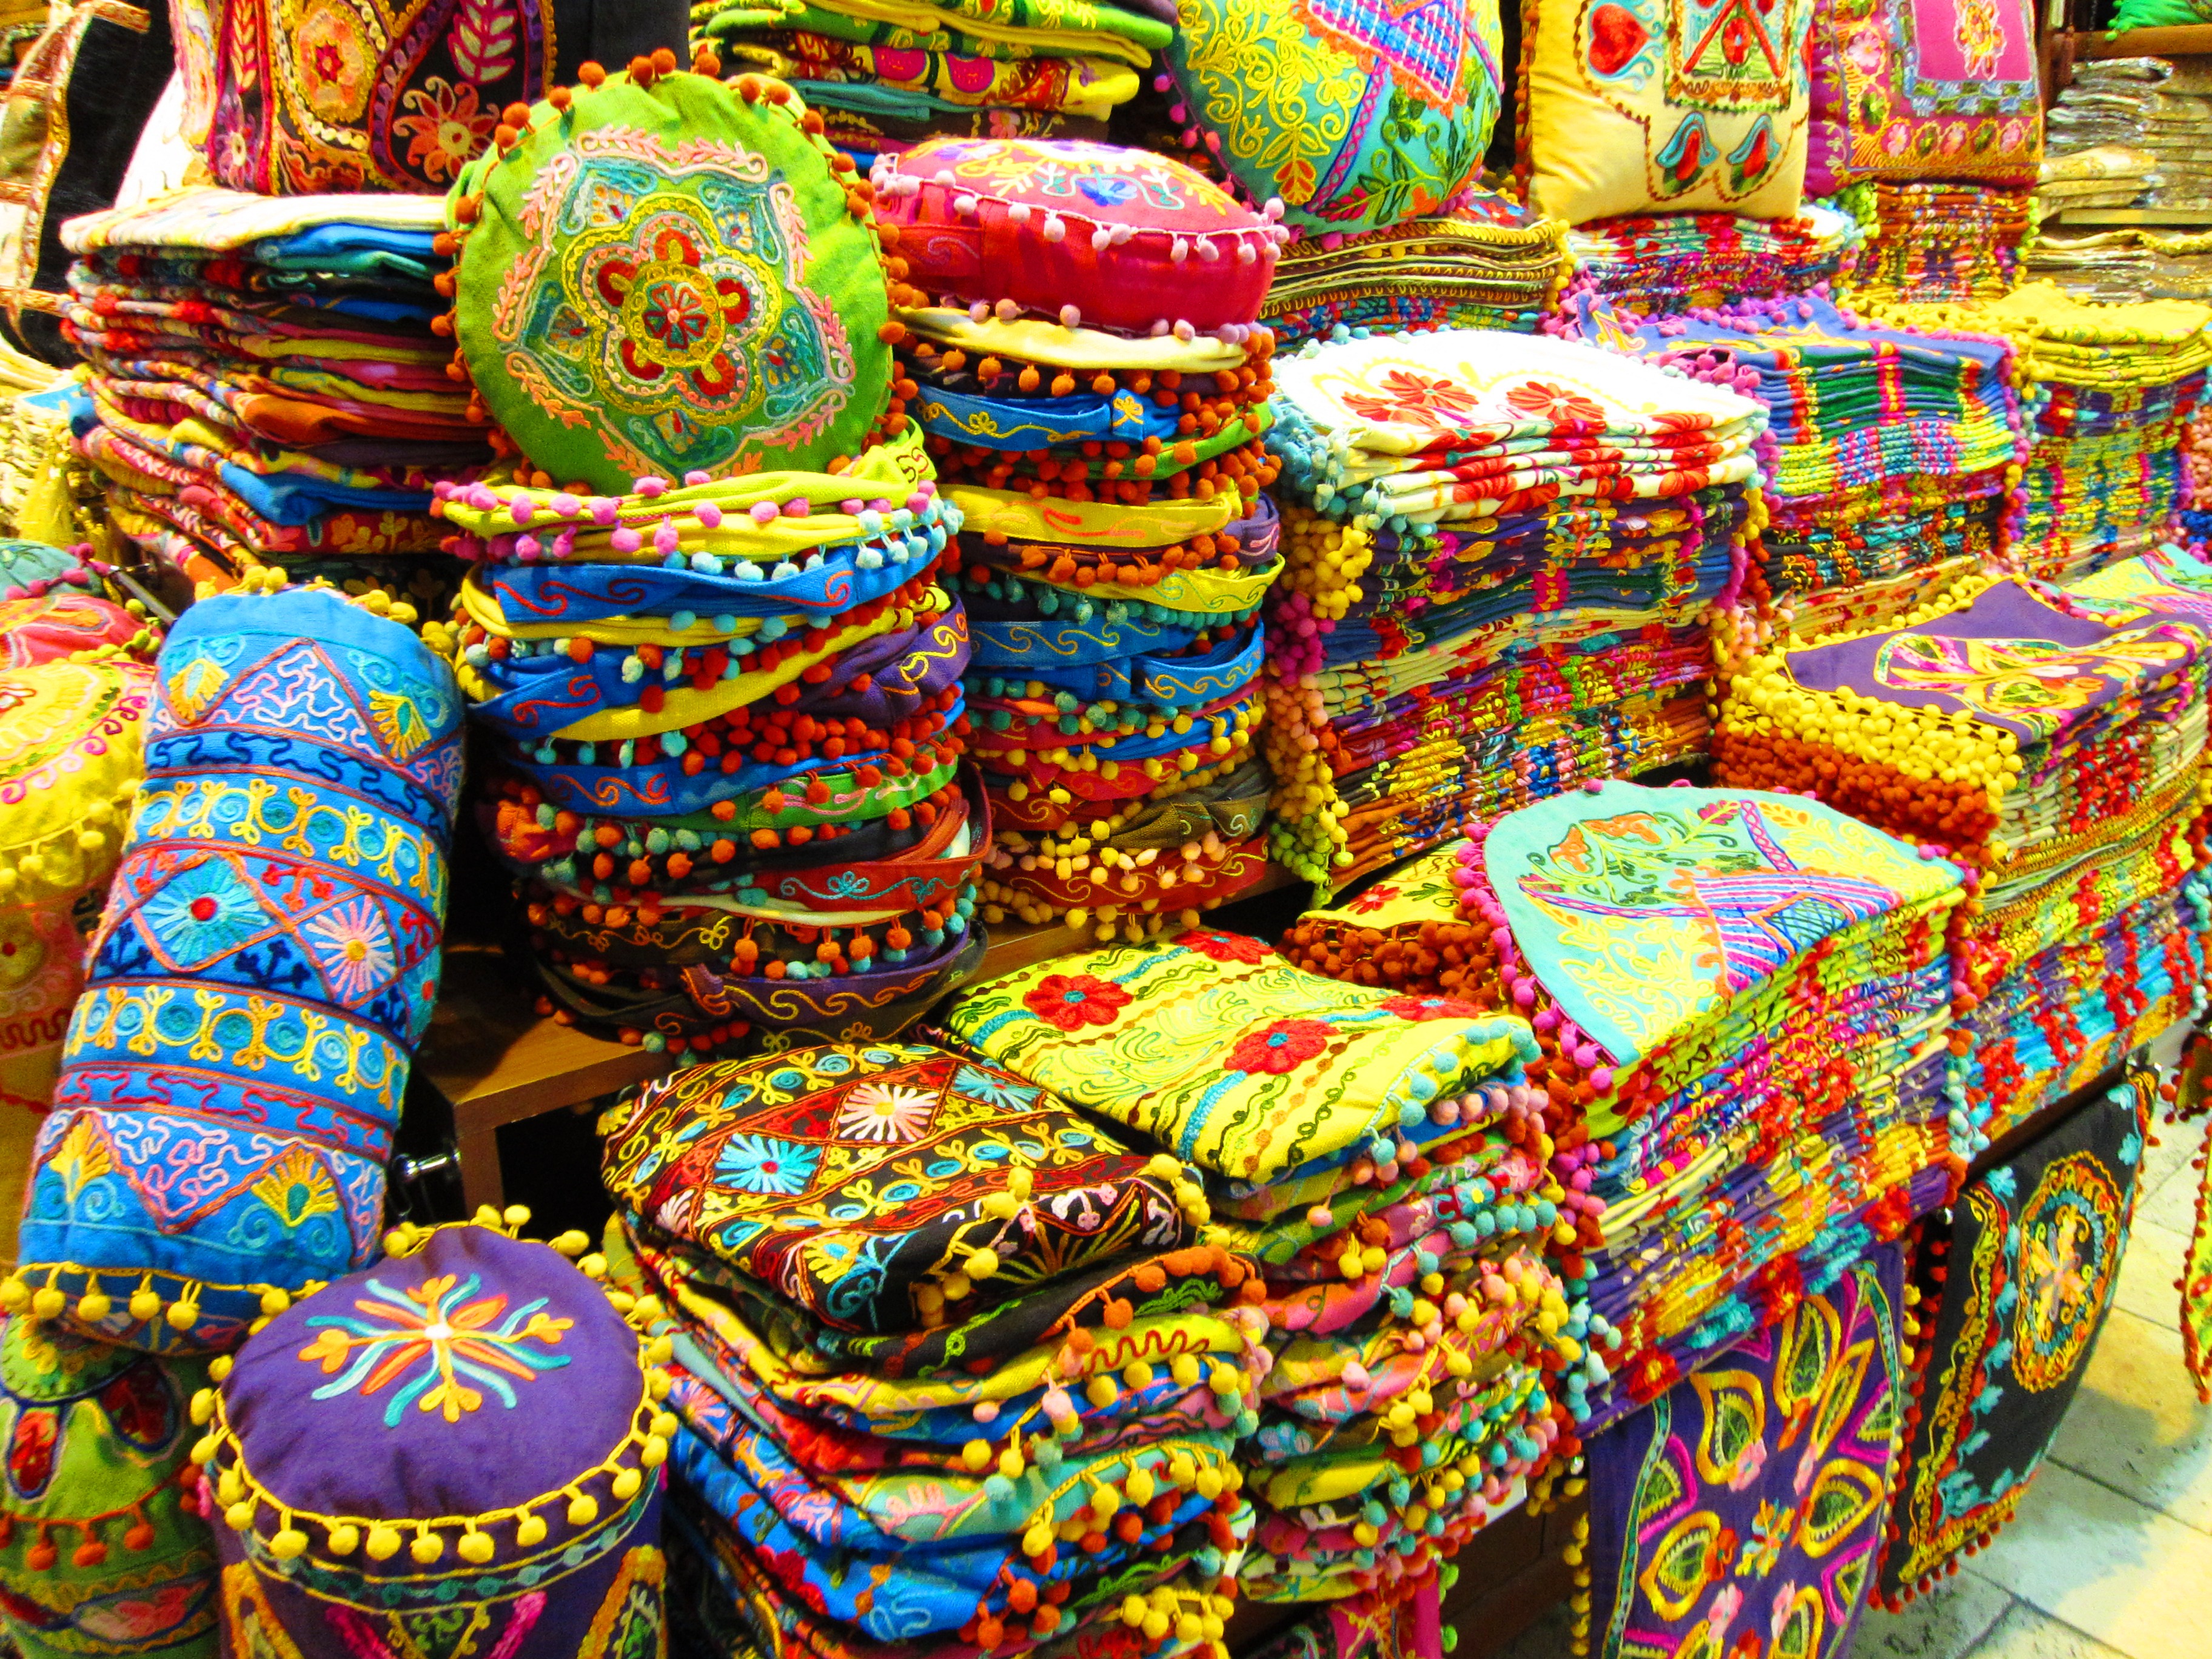 Узбекские товары. Узбекистан Восточный колорит. Узбекистан Самарканд базар. Узбекистан Восточный рынок. Таджикские сувениры.